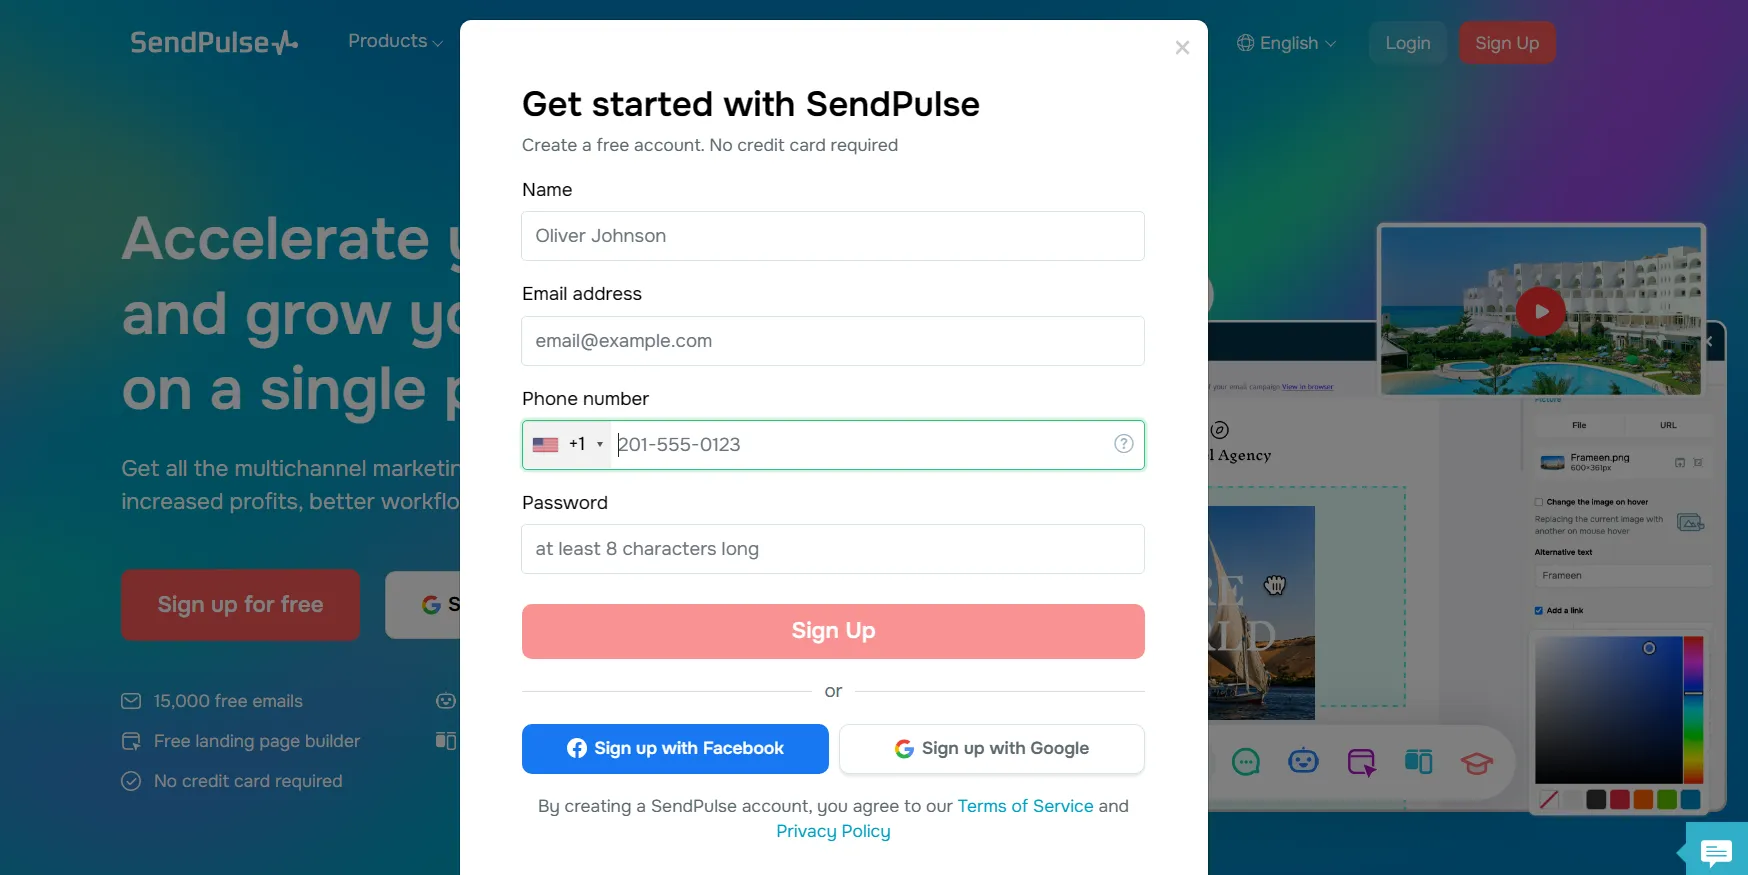 SendPulse- Sign Up for an Account